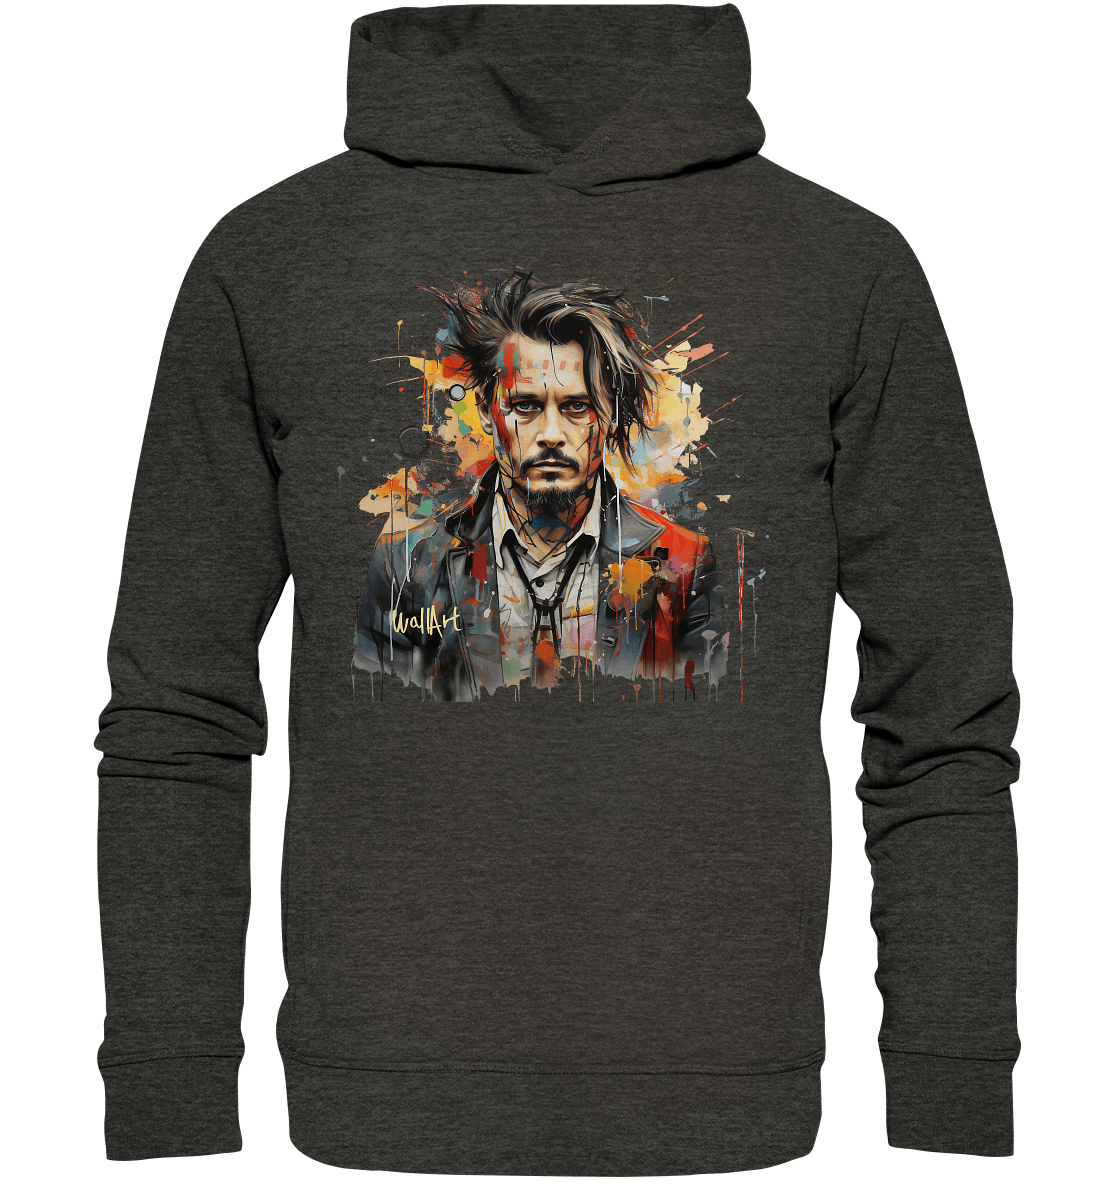 WallArt - Johnny Depp - Organic Fashion Hoodie - Snapshirts